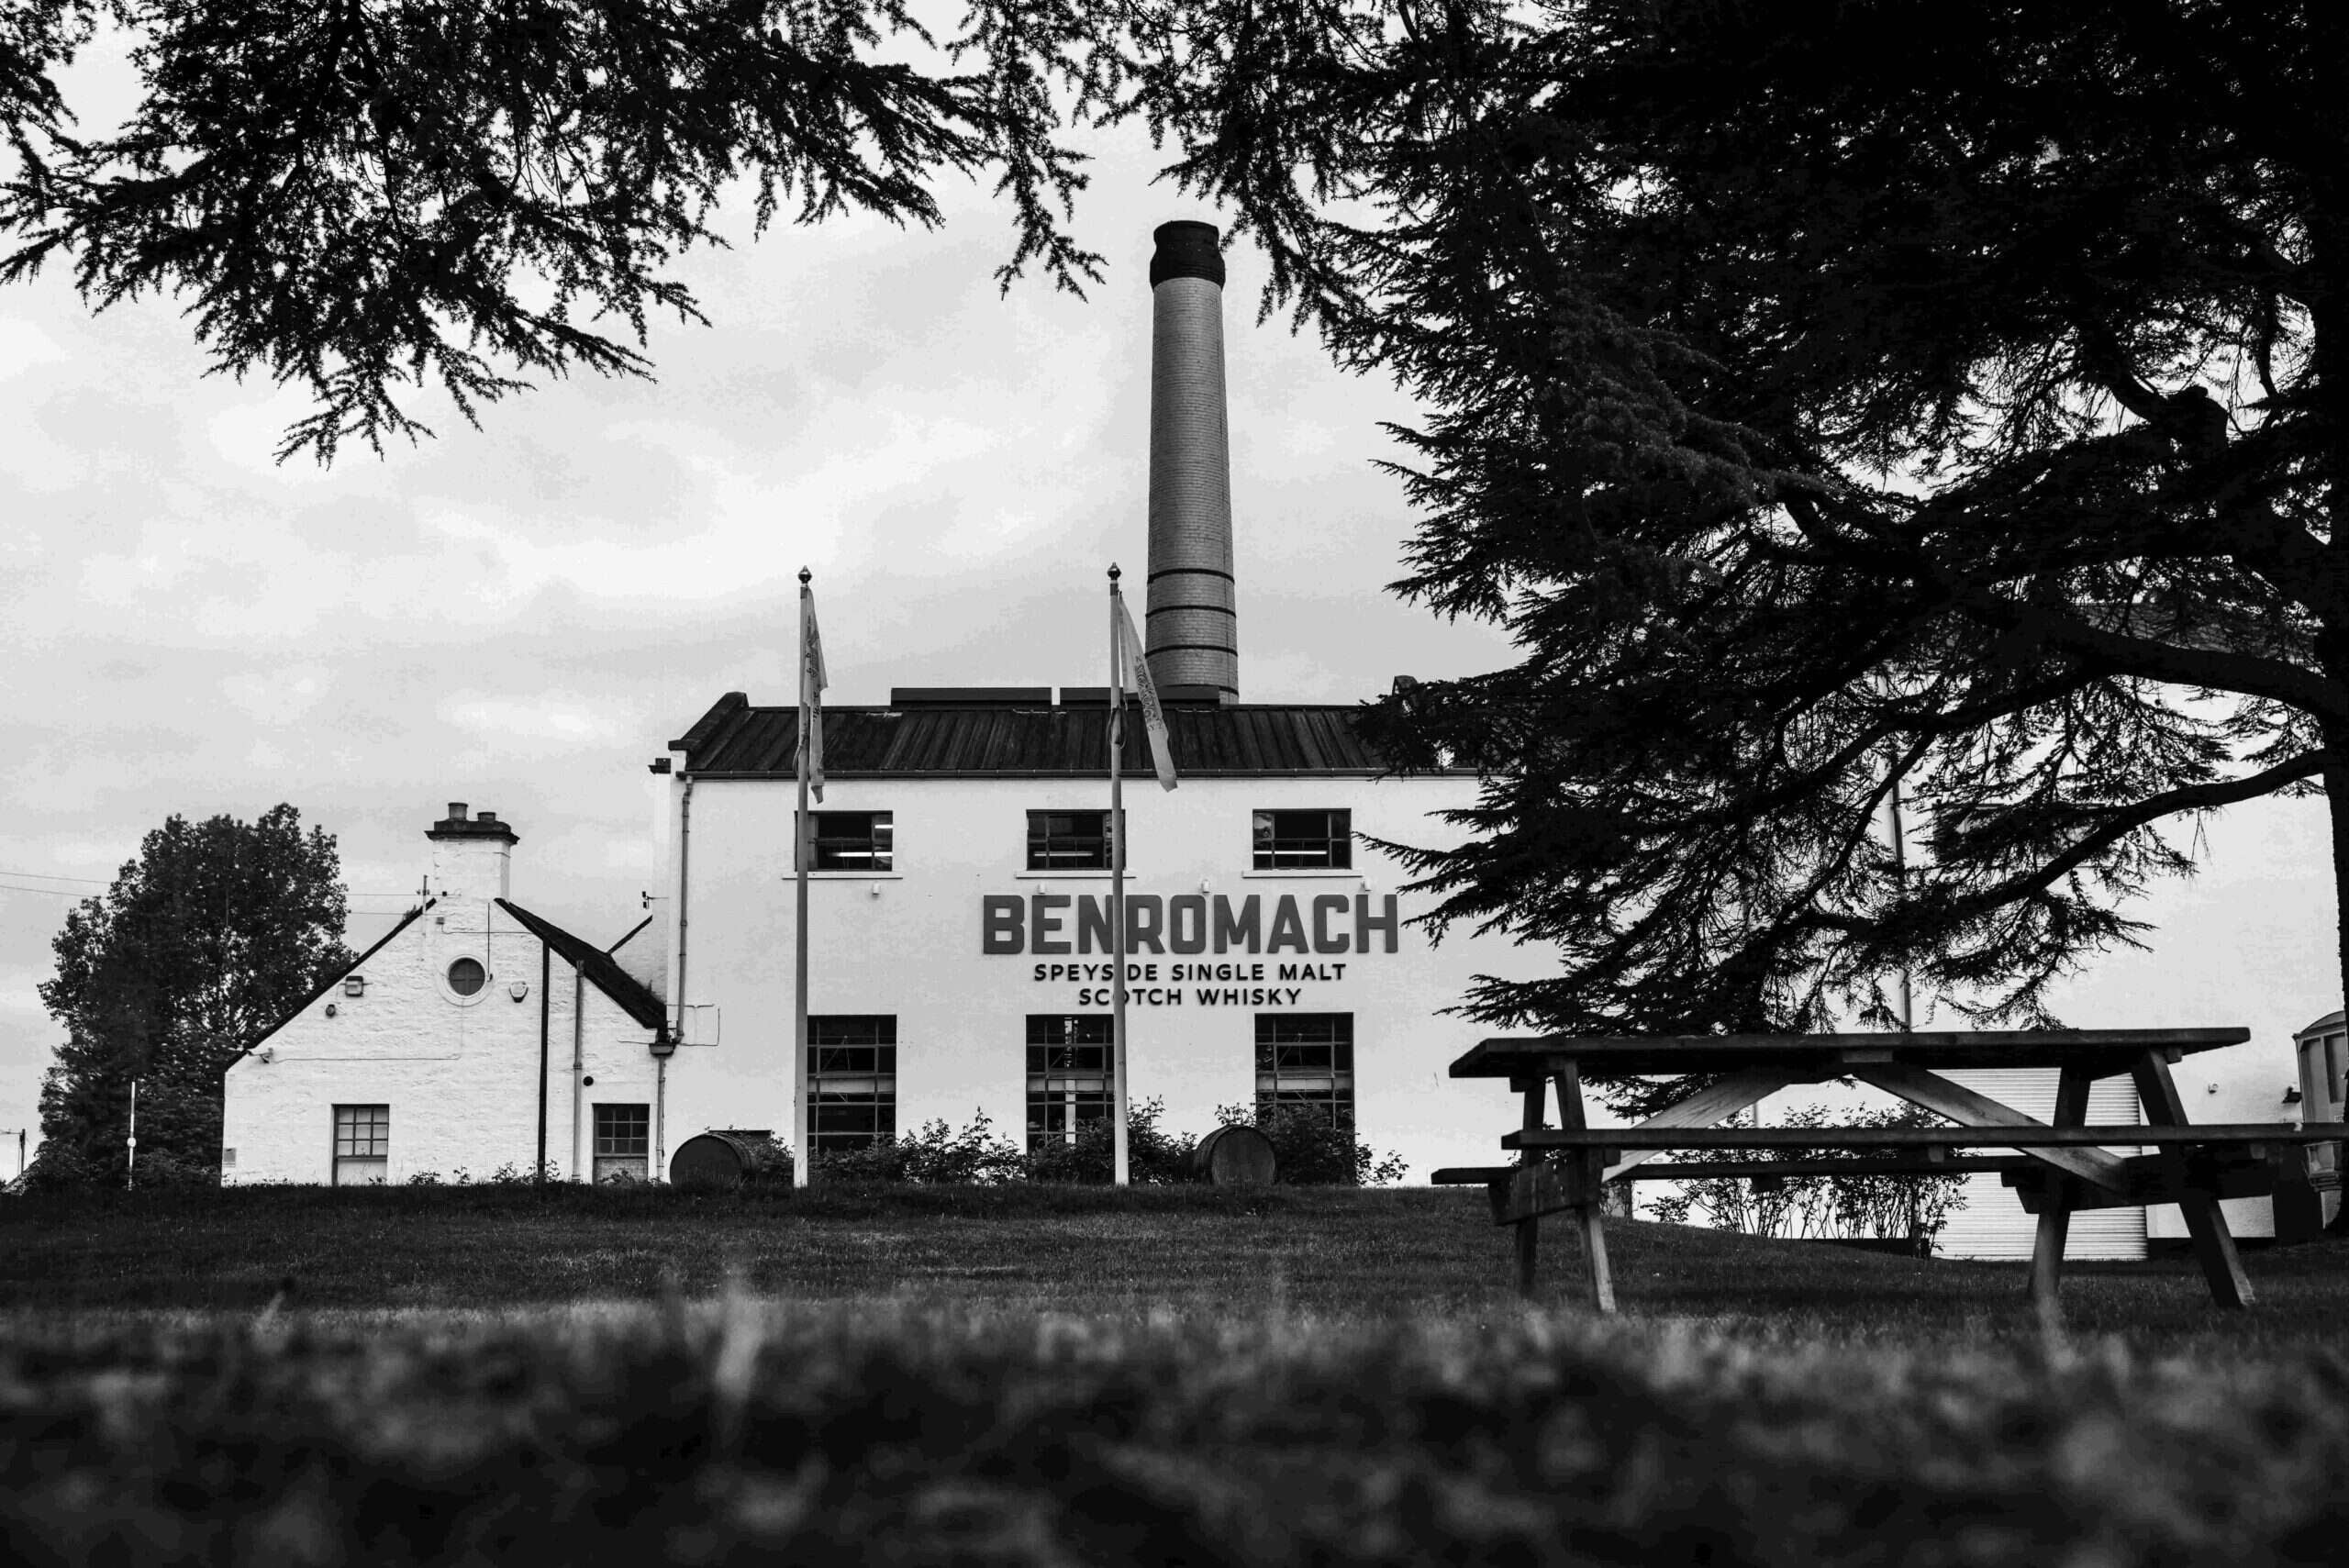 Gordon & MacPhail's Benromach distillery